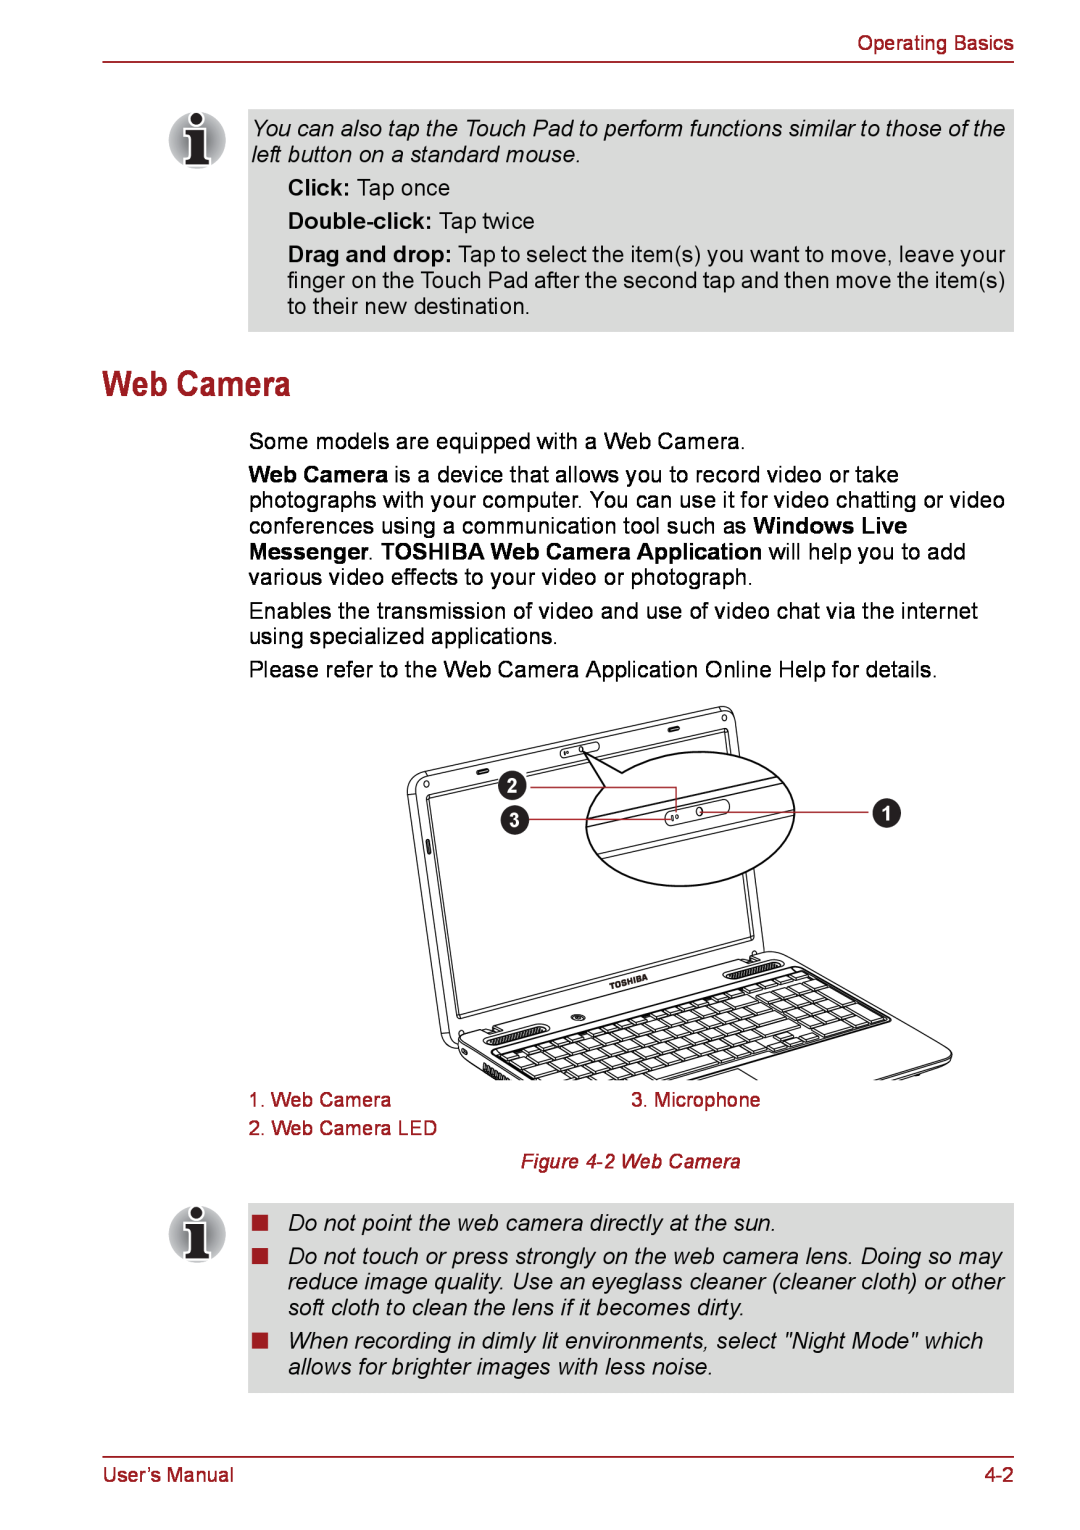 Toshiba PSC08U-02D01D user manual Web Camera, Double-click Tap twice 